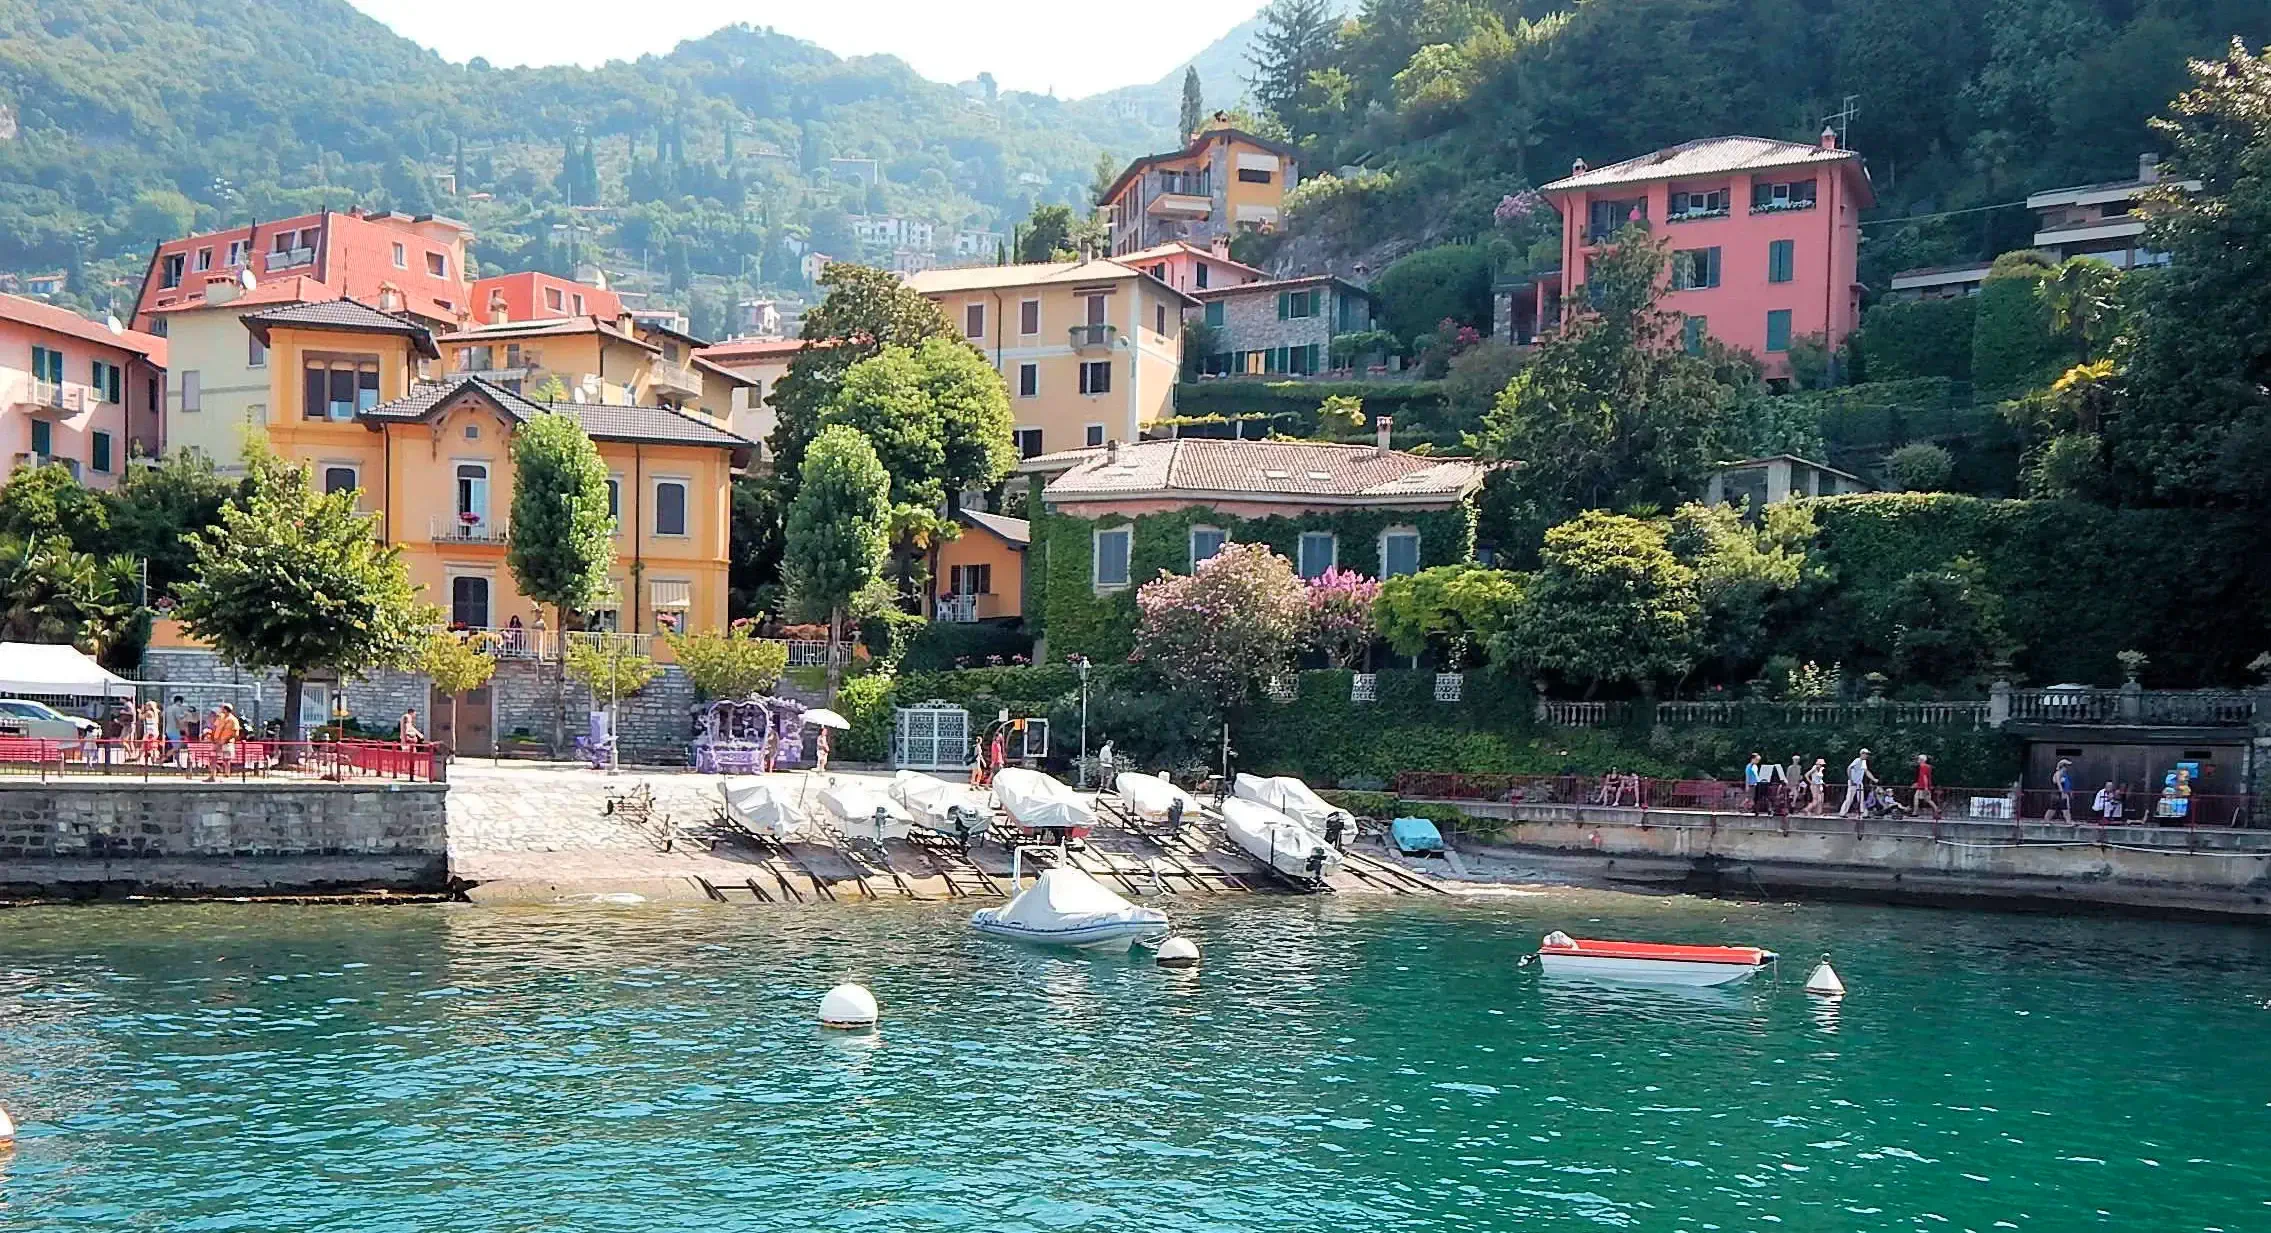 A trip to Lake Como